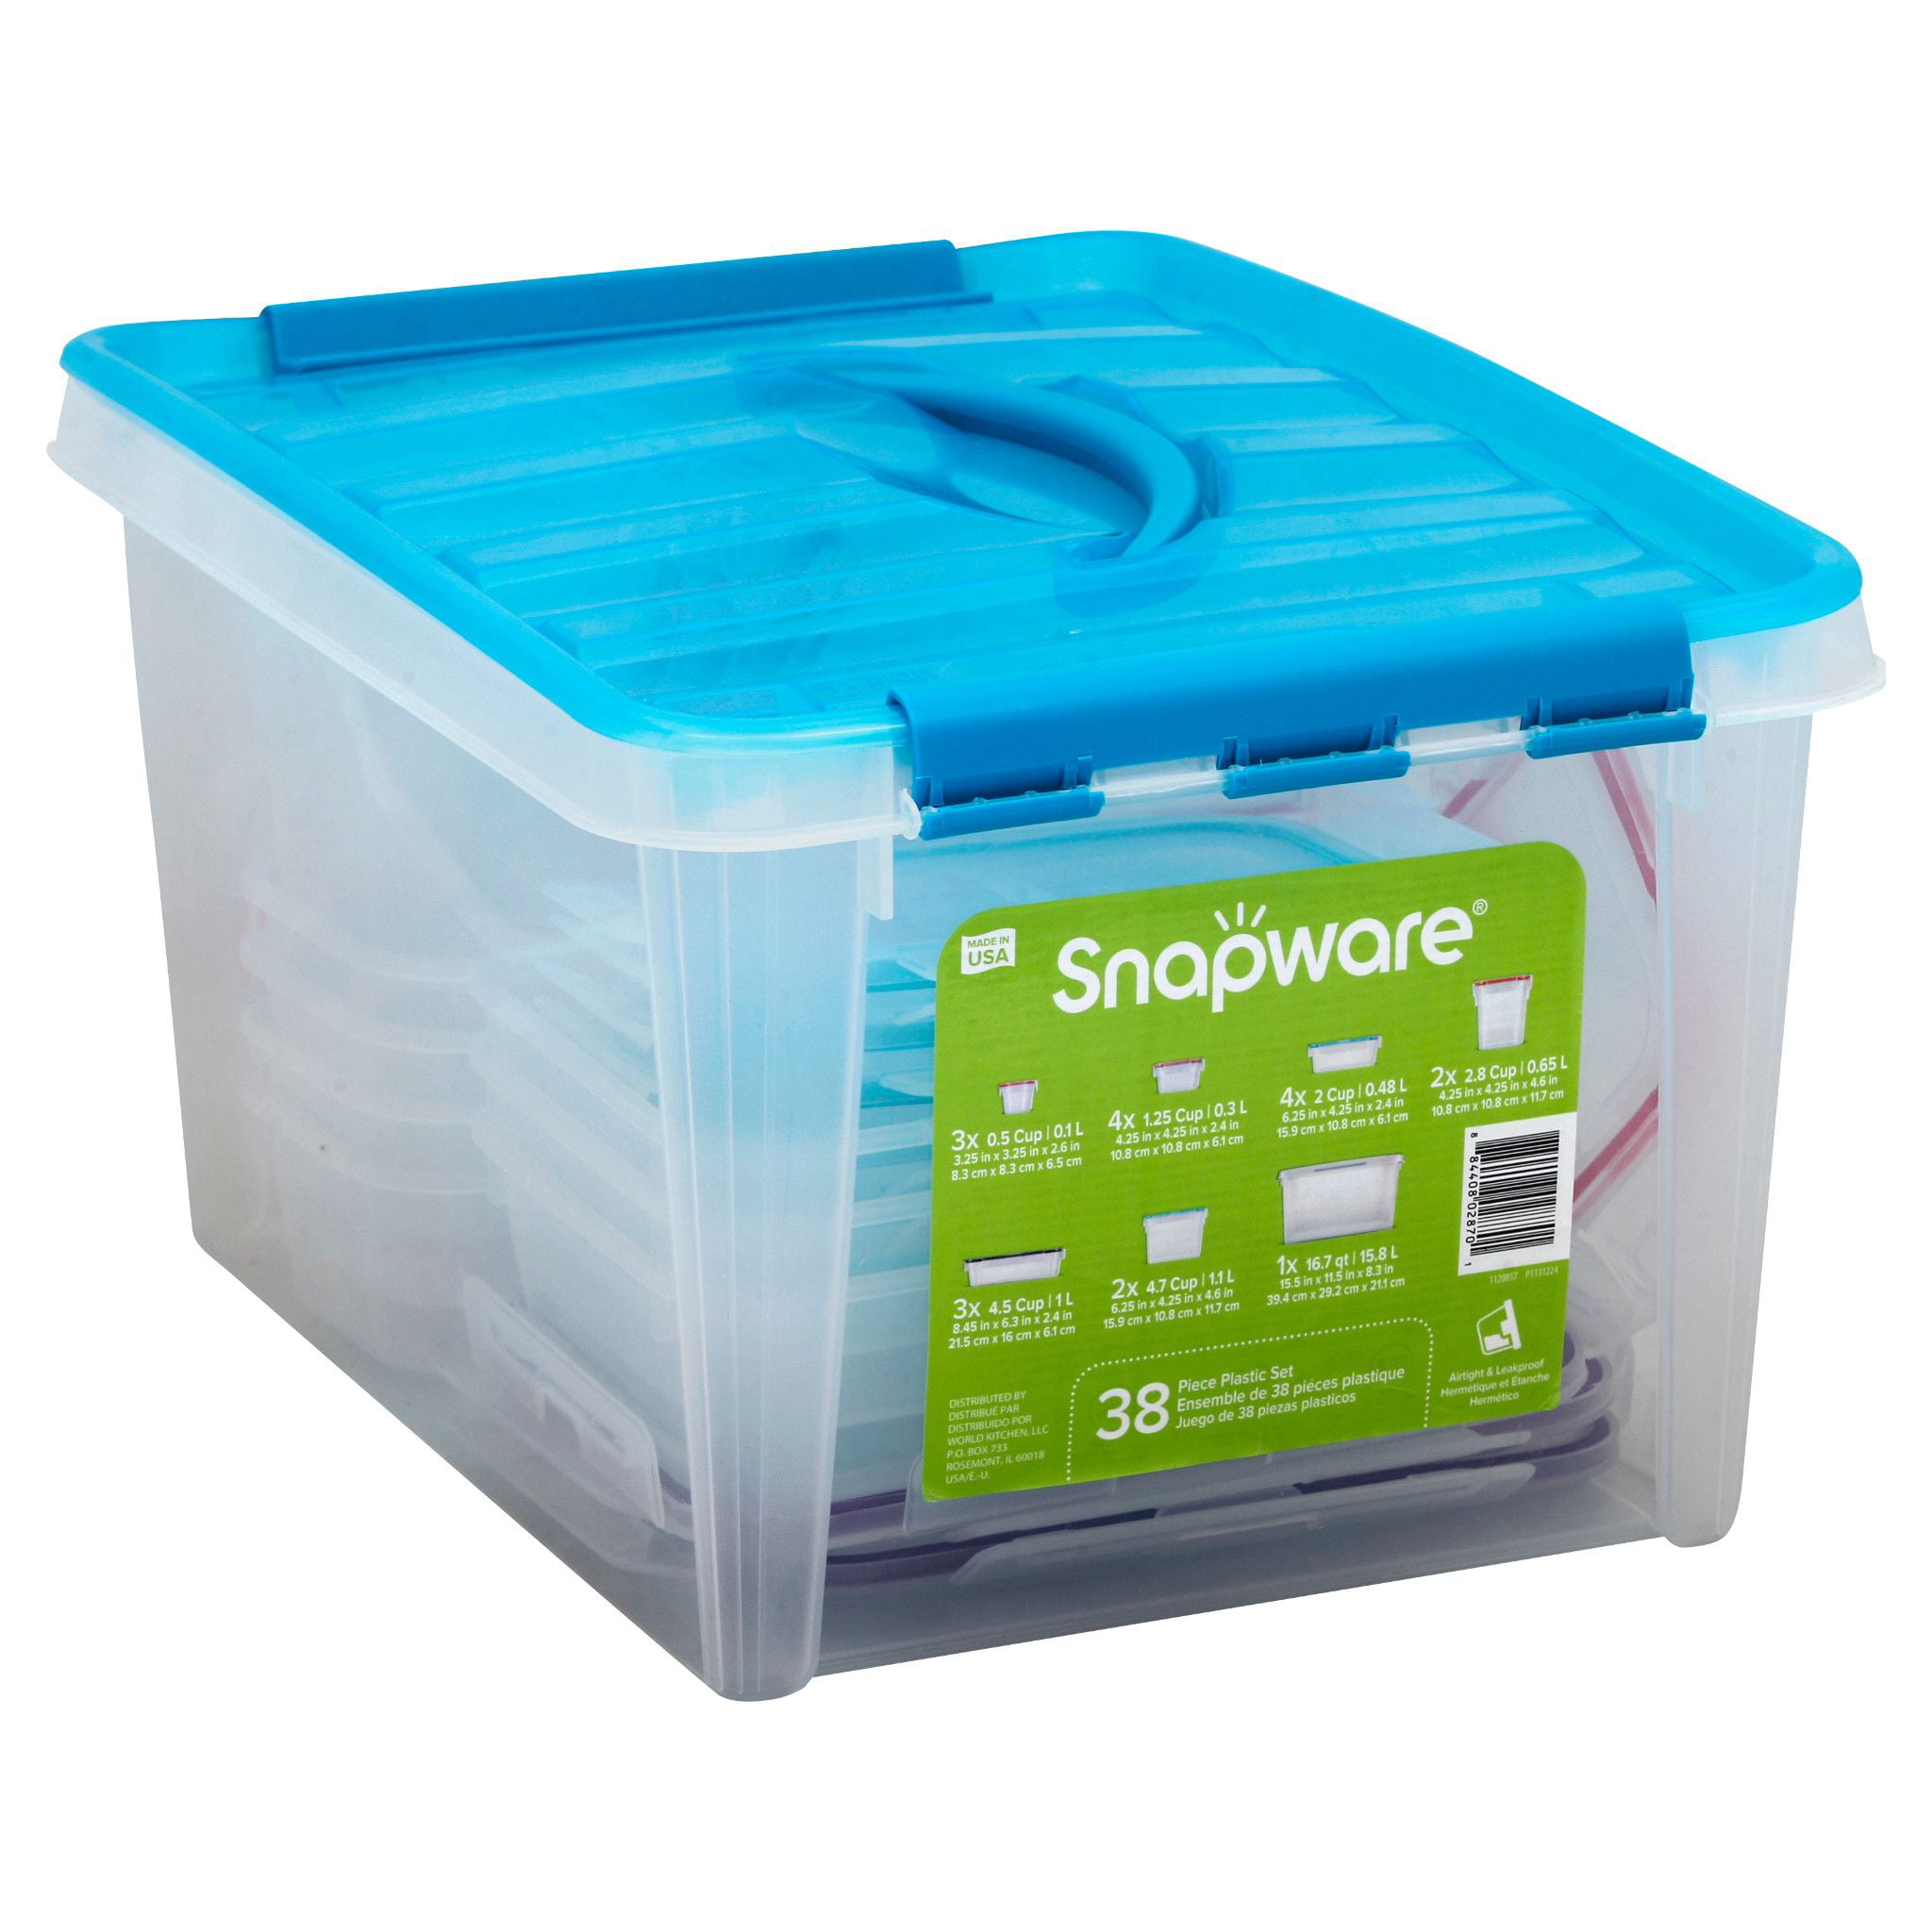 Snapware Clear BPA-Plastic Storage Container Set 38 pcs 884408032432